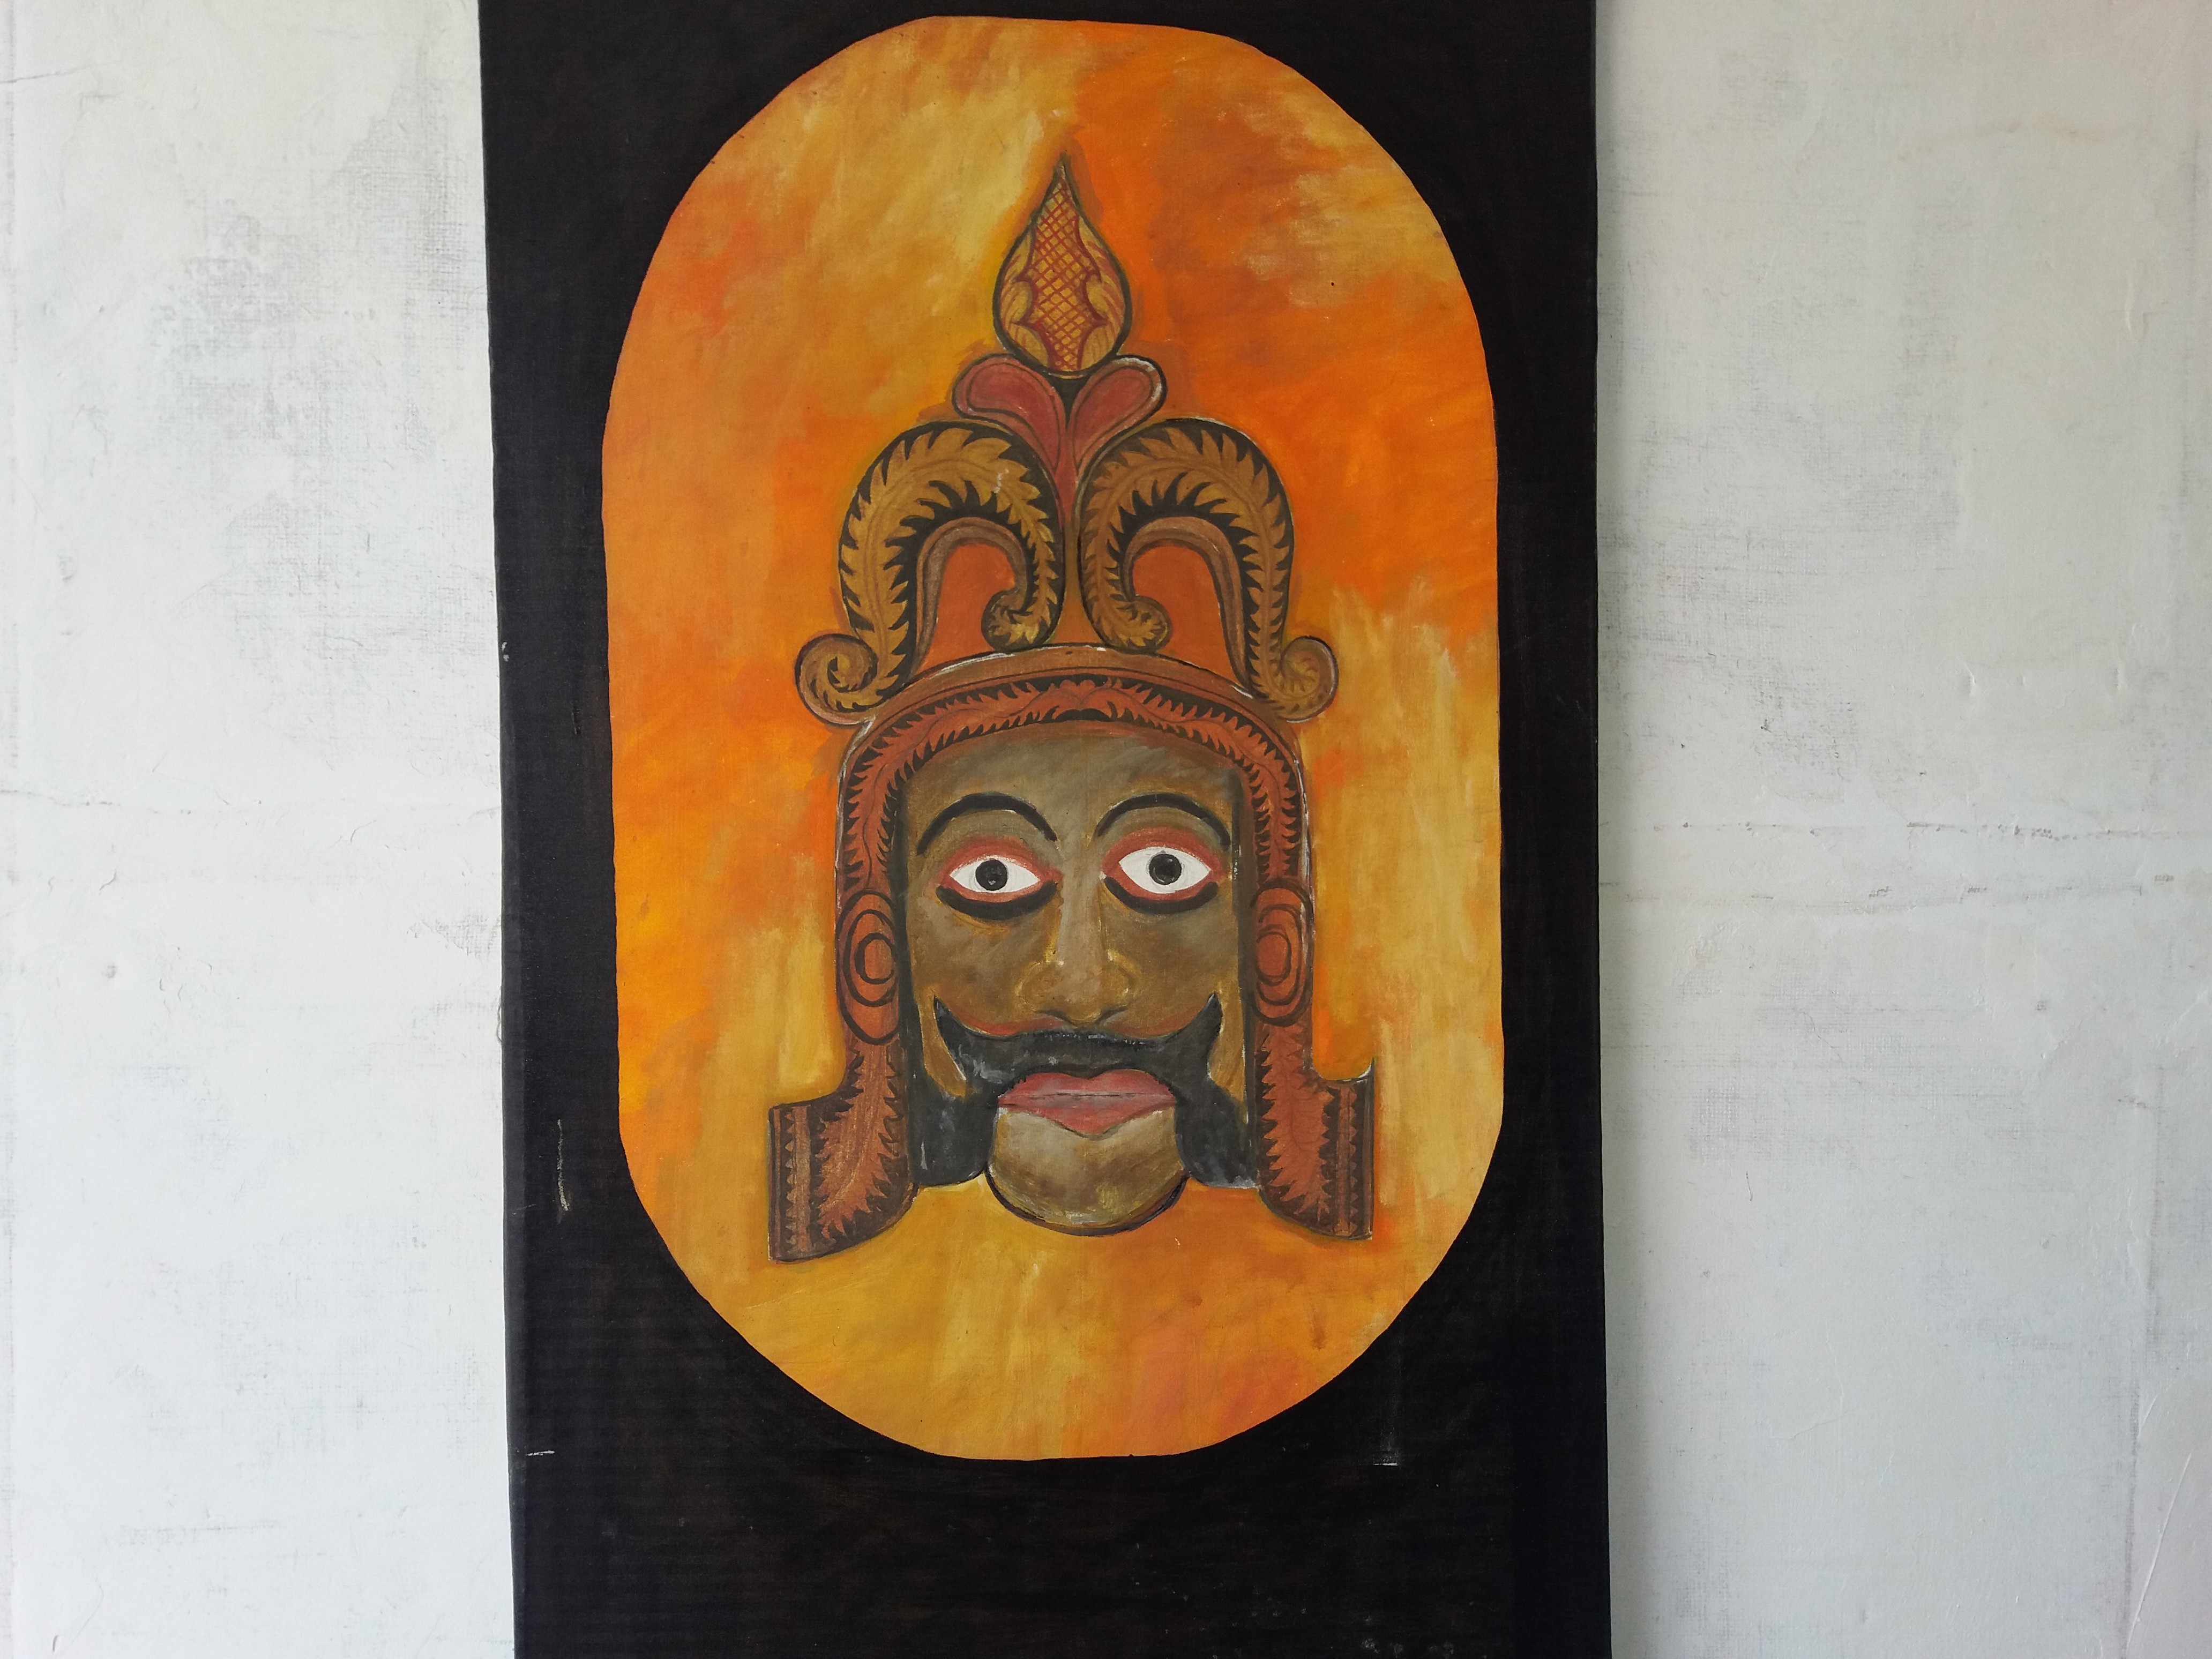 Sri Lankan traditional masks by Aloka Jayathilake